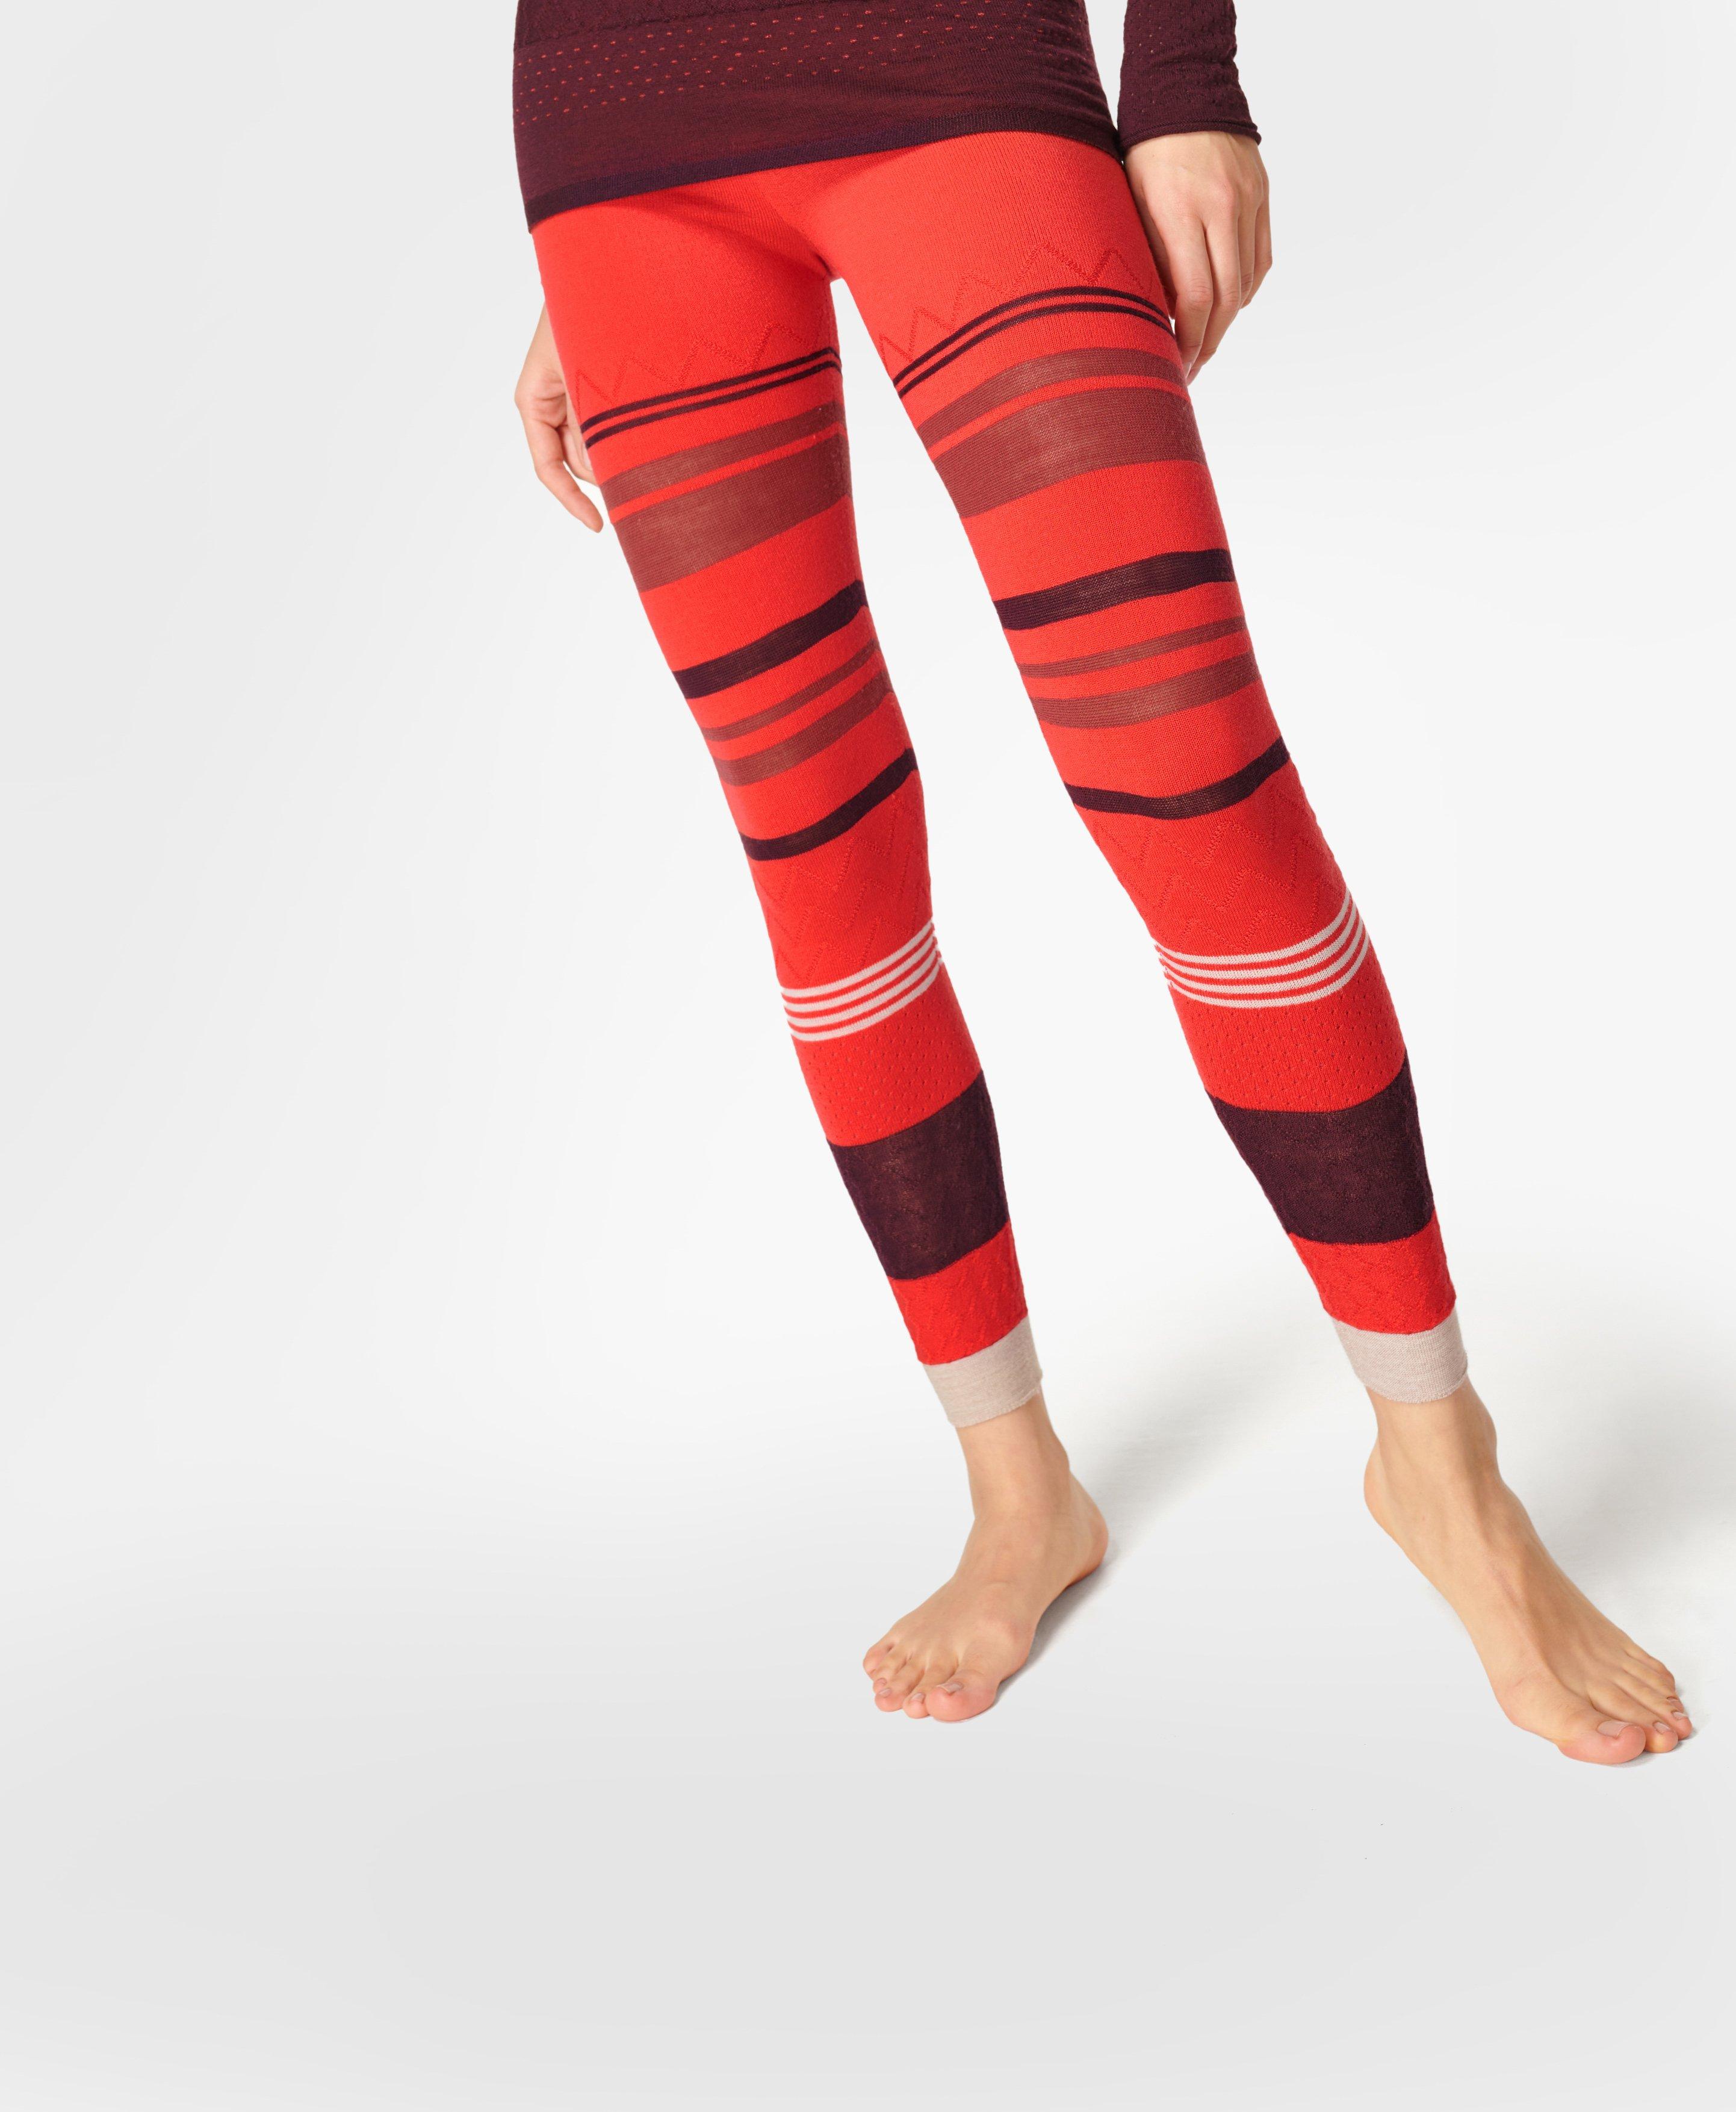 Women's Merino Wool Pants - Base Layer Cherry Red, Bottom, Underwear, Thermal Leggings, Midweight